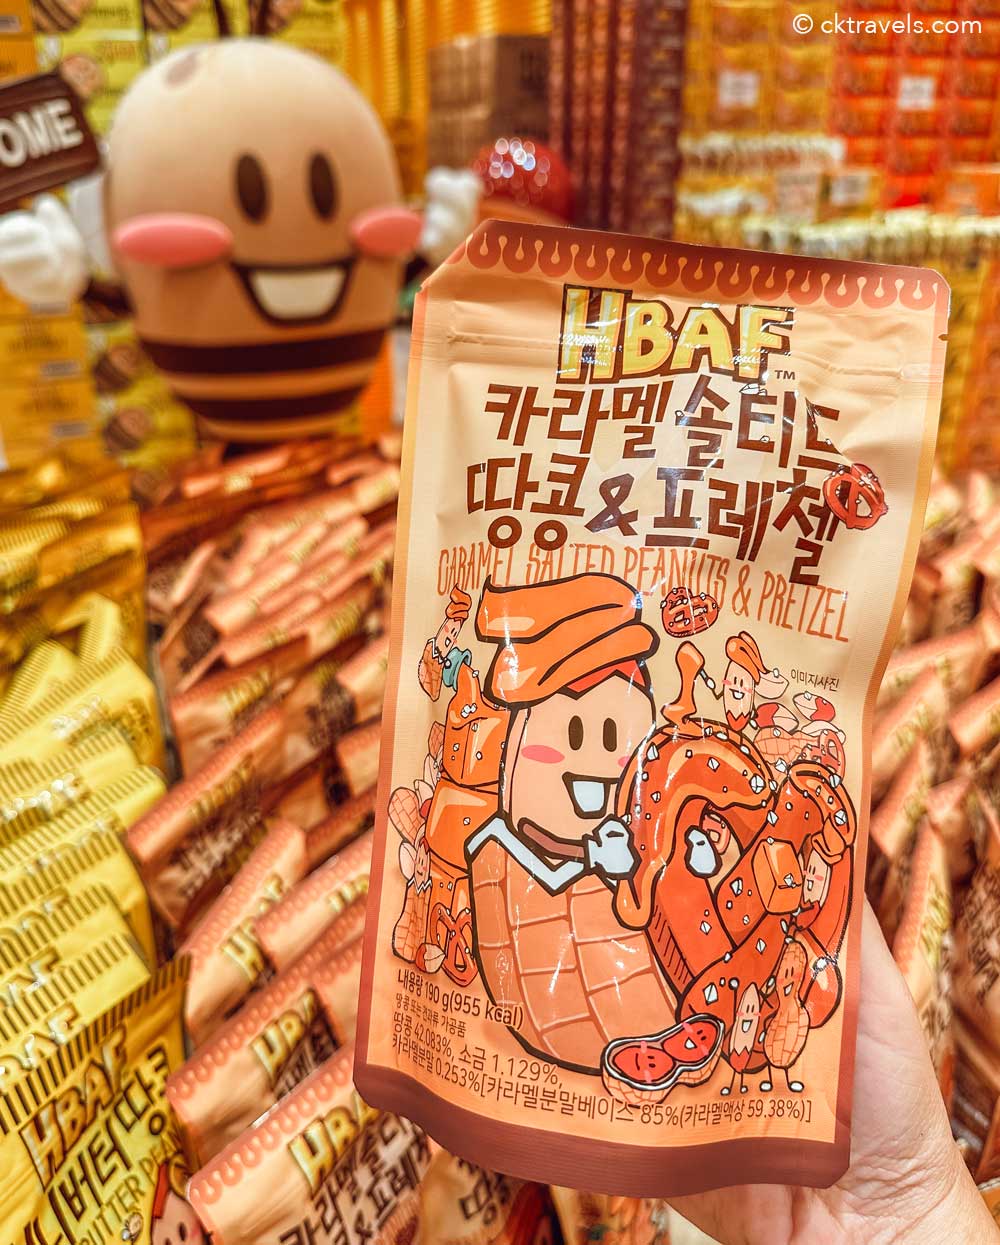 HBAF caramel salted peanuts and pretzel south korea